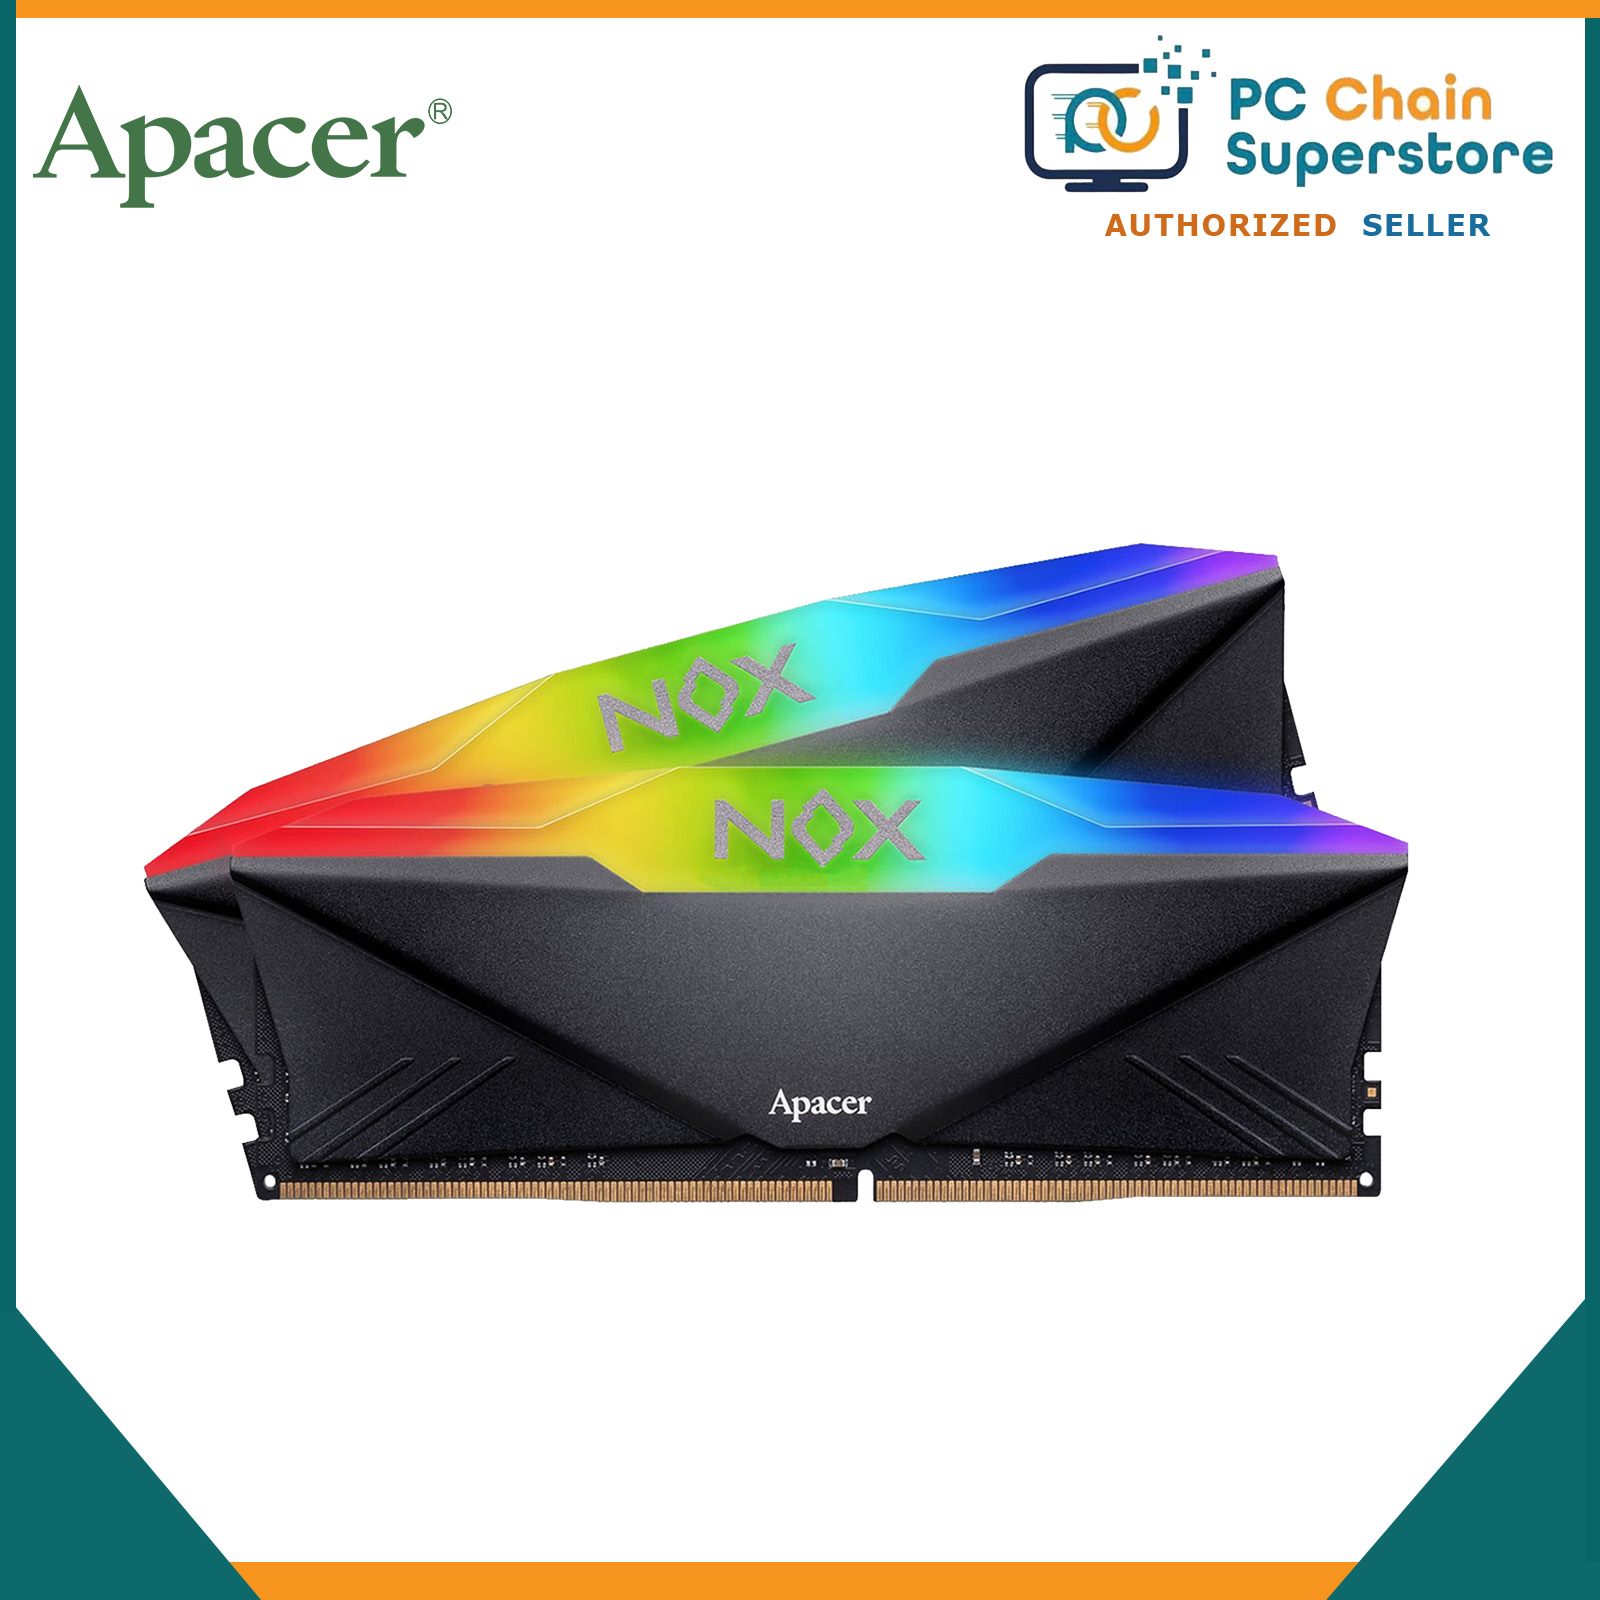 todos los días Increíble guardarropa Apacer NOX RGB 16GB (8GBx2) DDR4 3200Mhz CL16 Gaming Memory RAM Compatible  with ASUS AURA Sync, MSI Mystic Lights, Gigabyte RGB Fusion and ASROCK  Polychrome Sync | Lazada PH